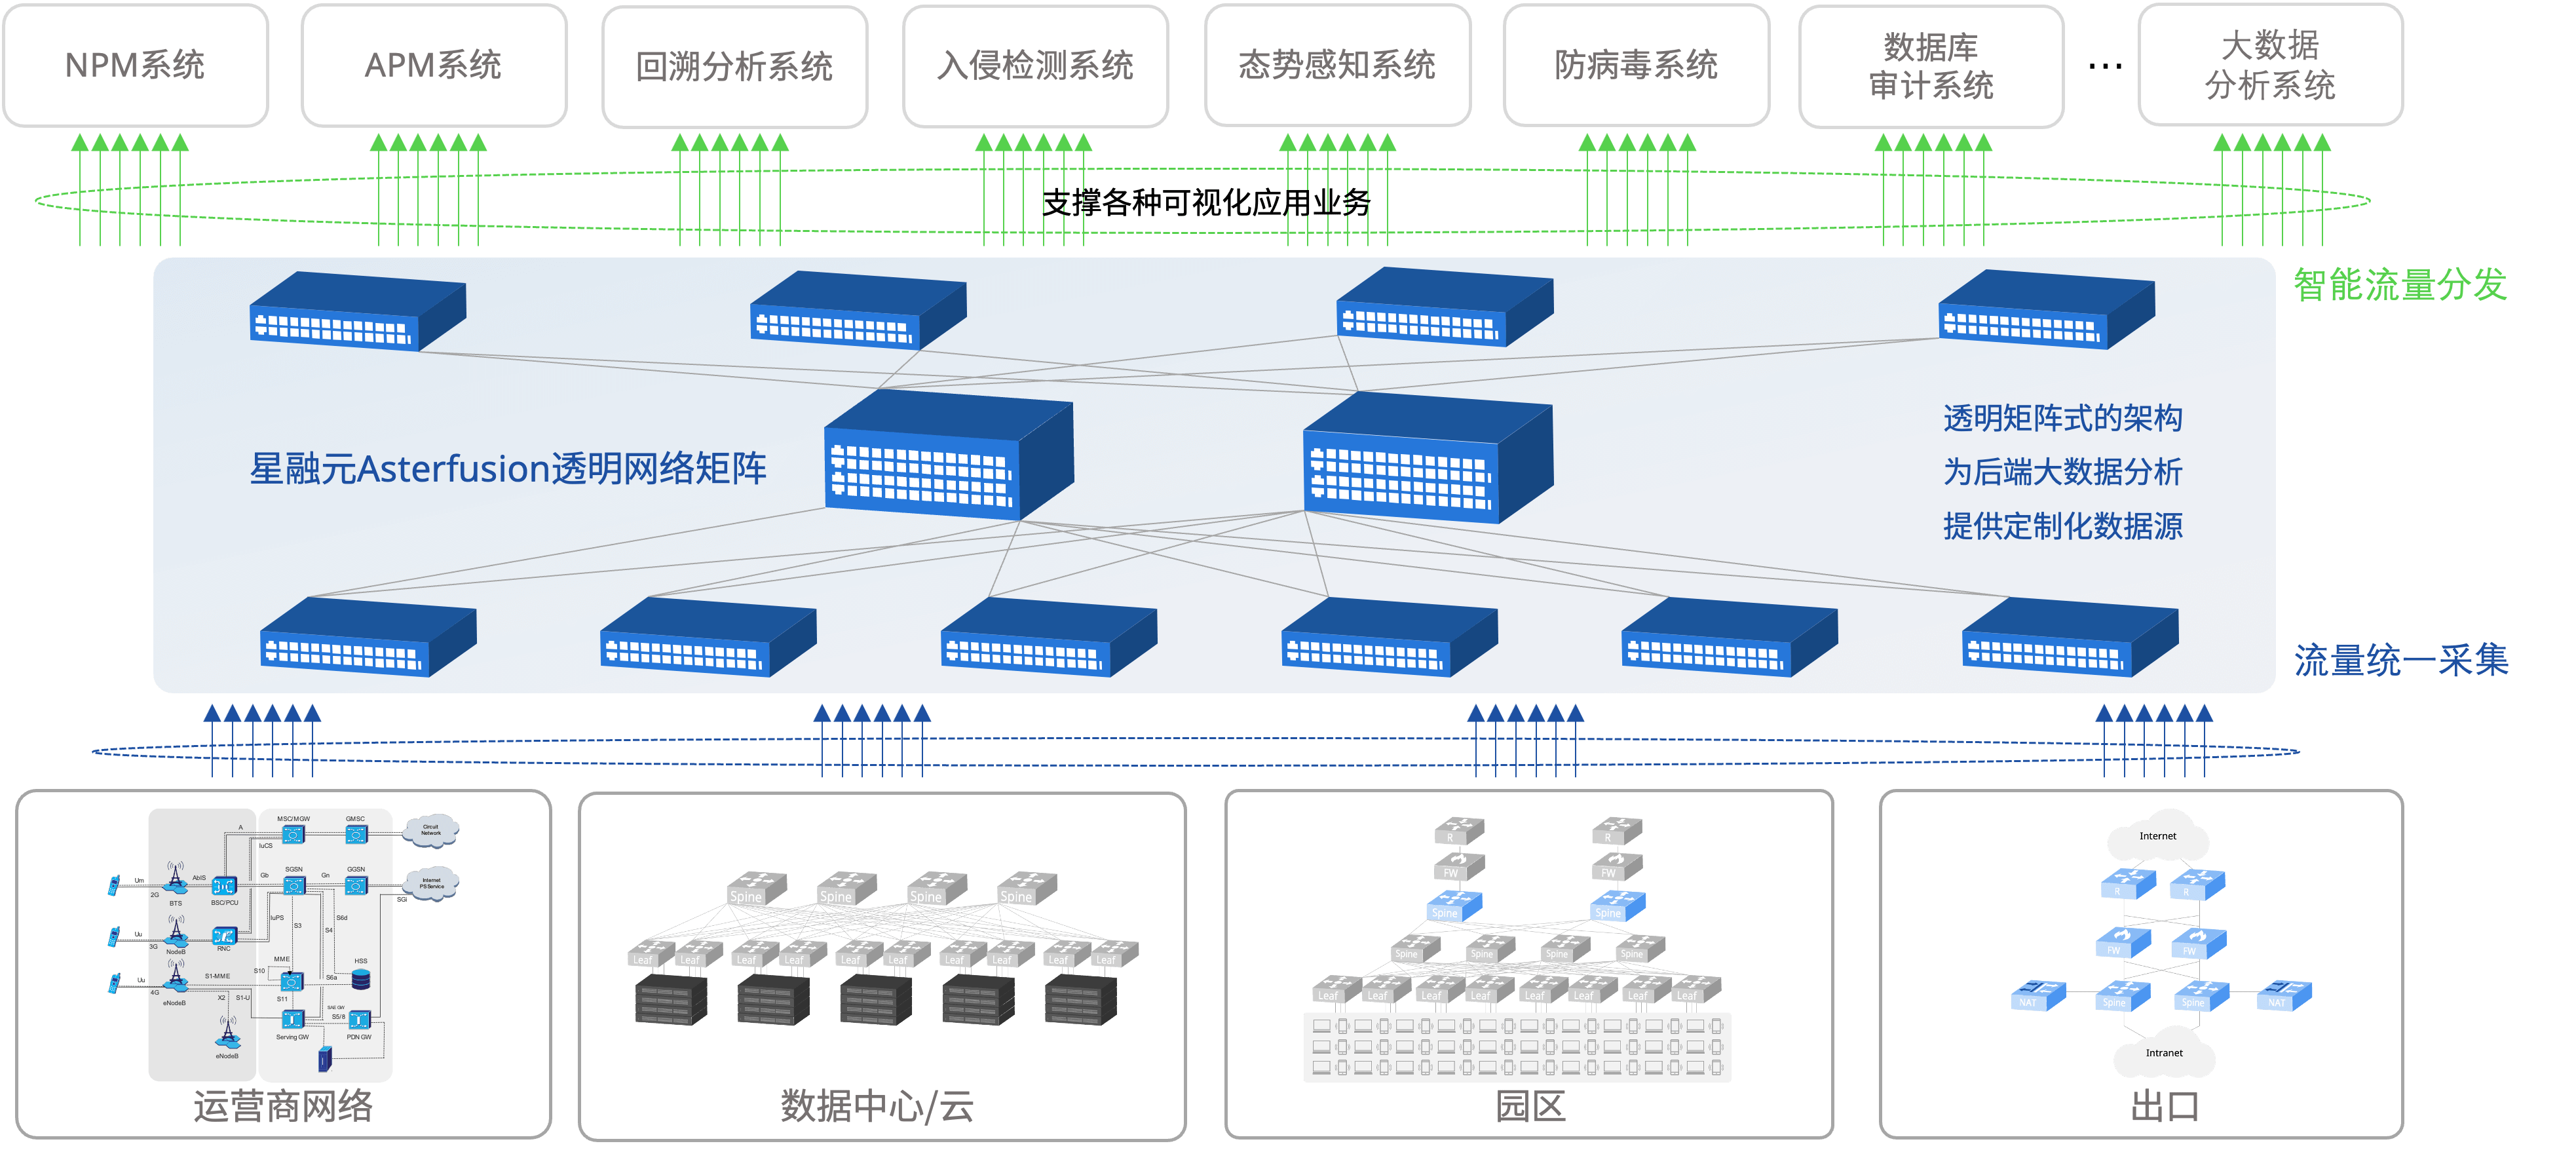 PX系列交换机部署在各种网络可视话环境中，提供流量统一采集和分发的拓扑图